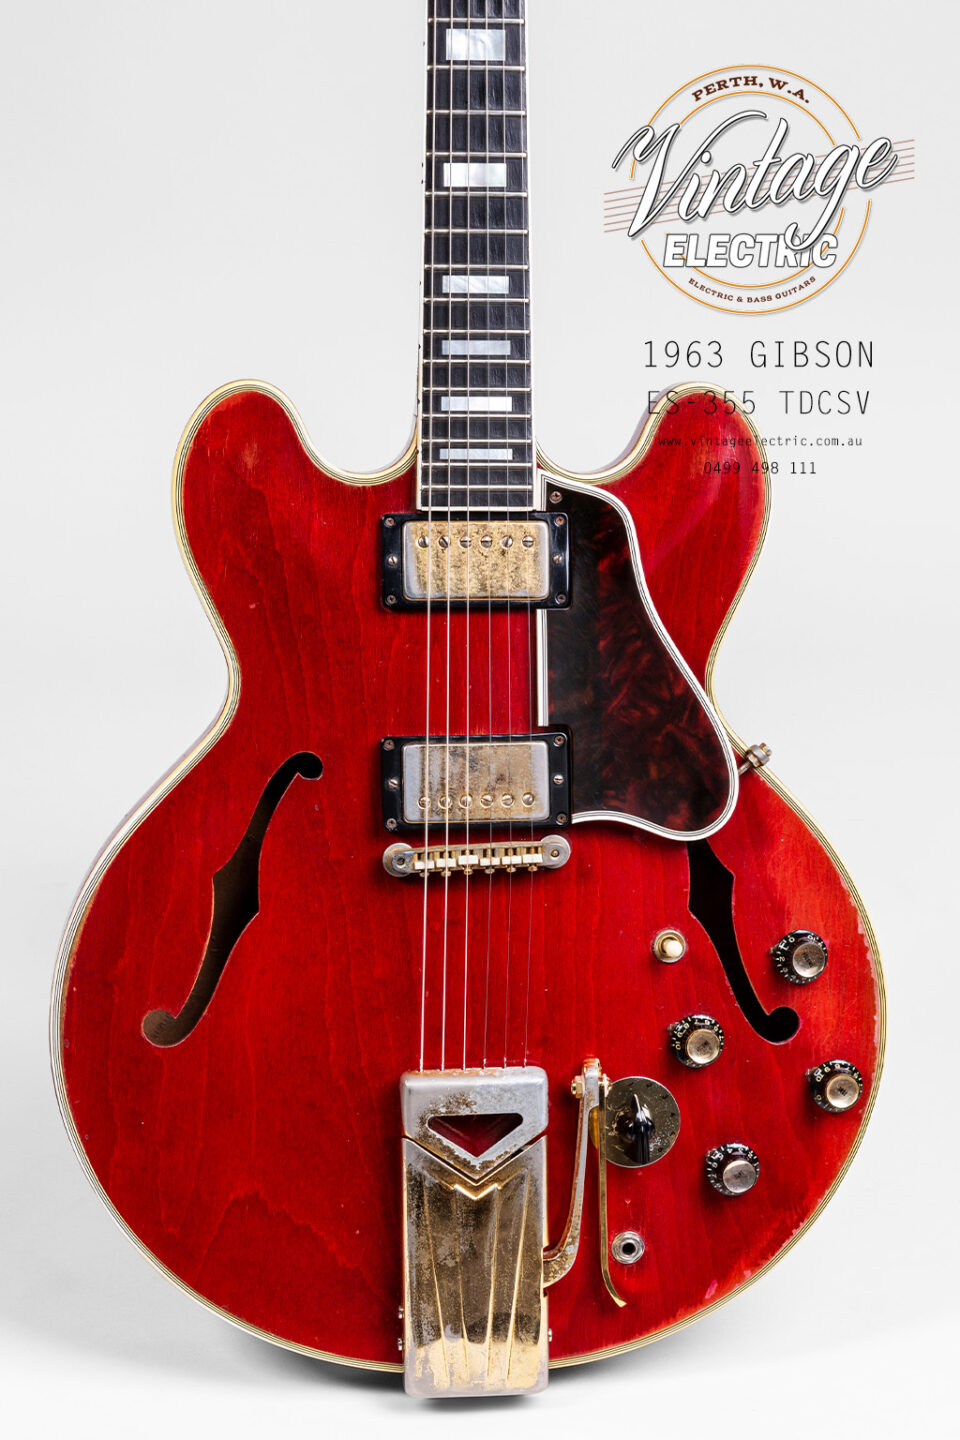 1963 Gibson ES-355 TDCSV Body